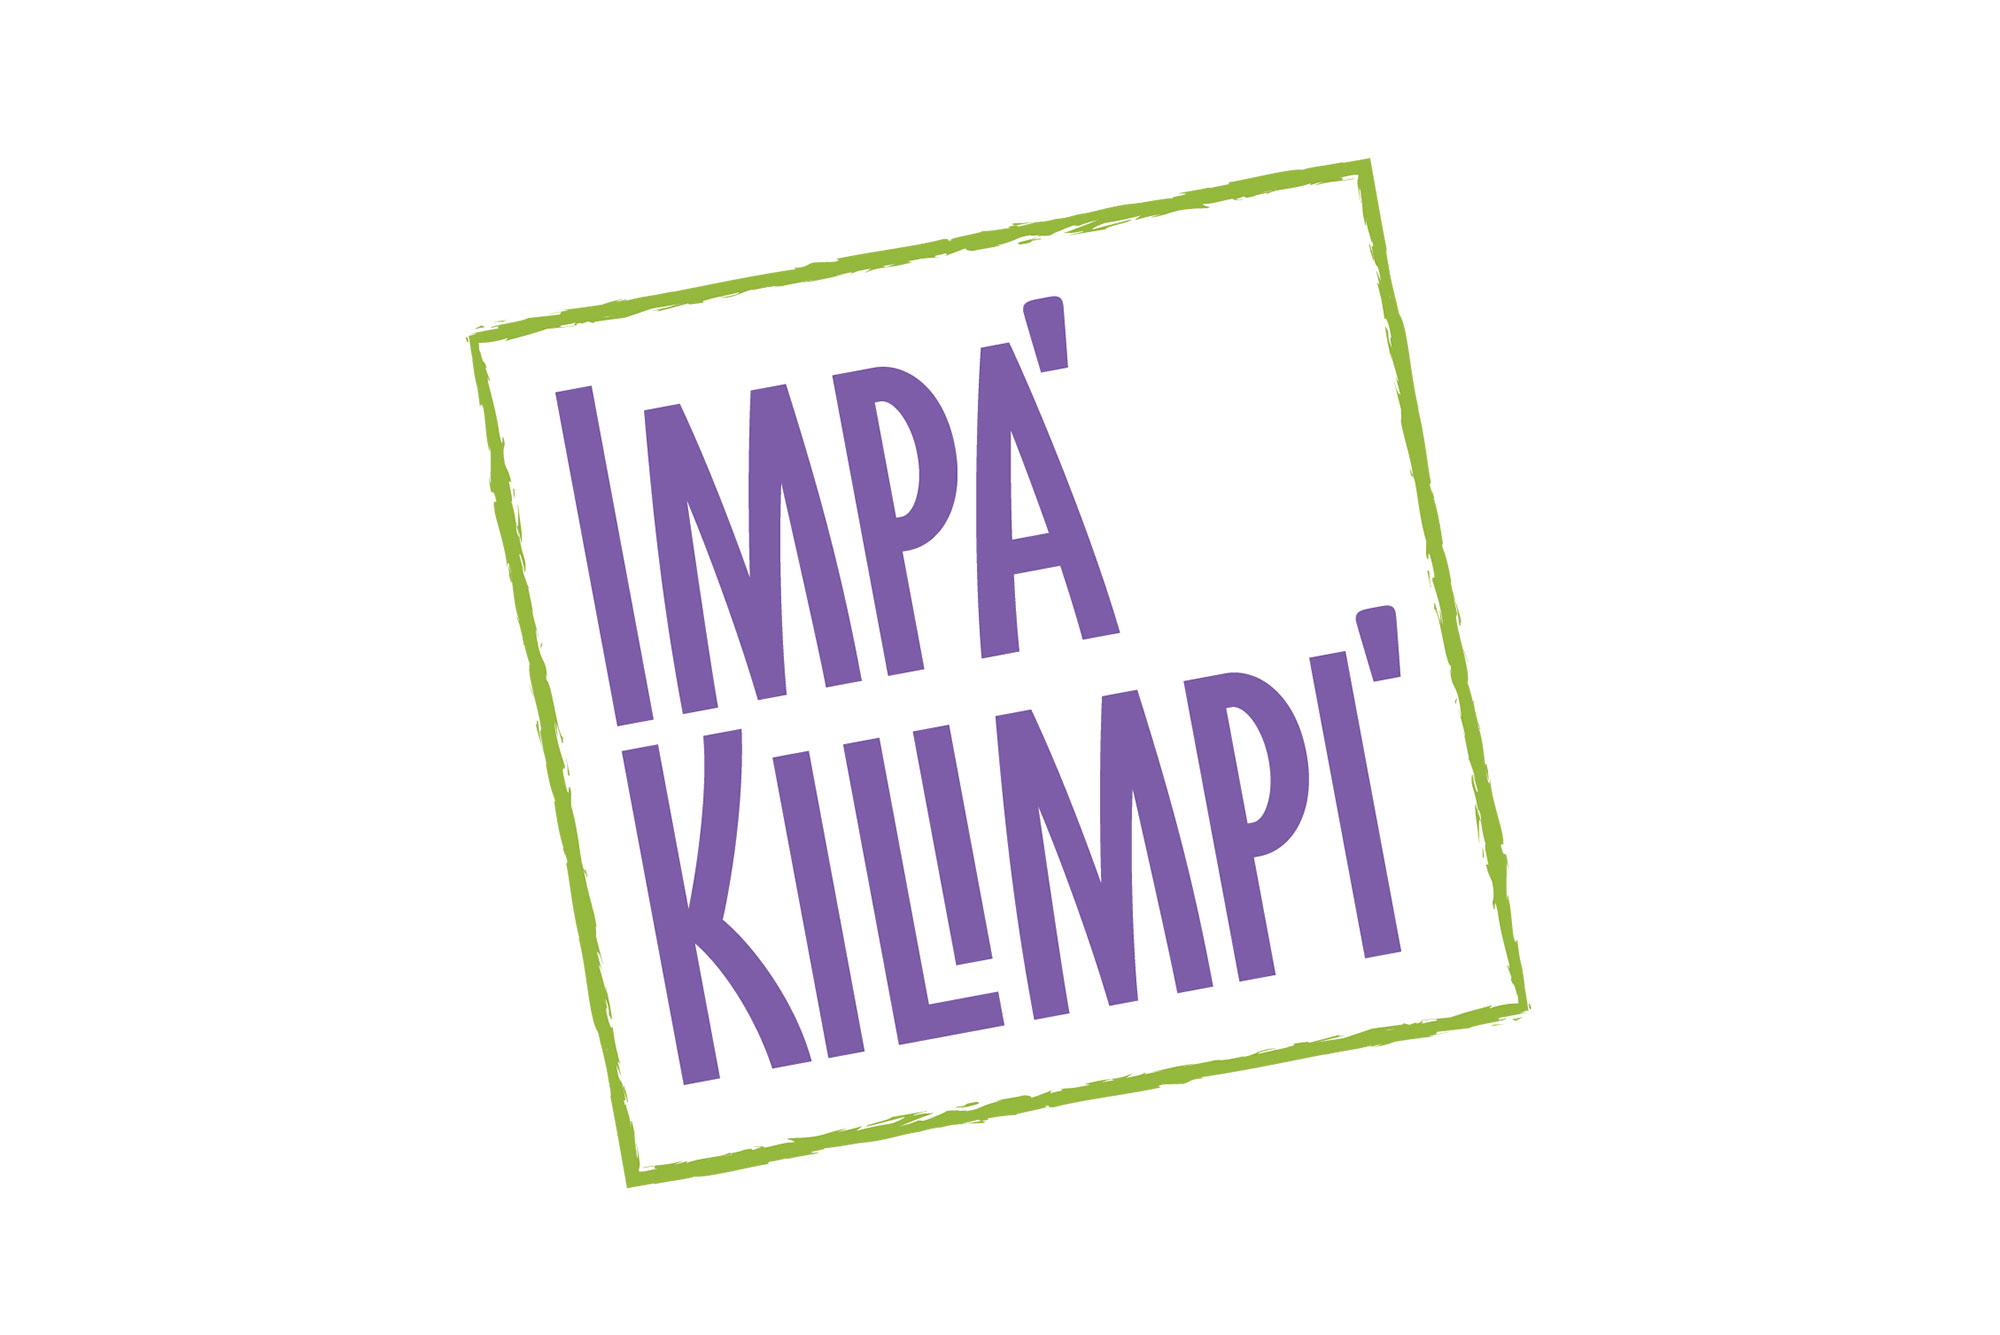 Impa' Kilimpi' (Strong Food) Nutrition Program